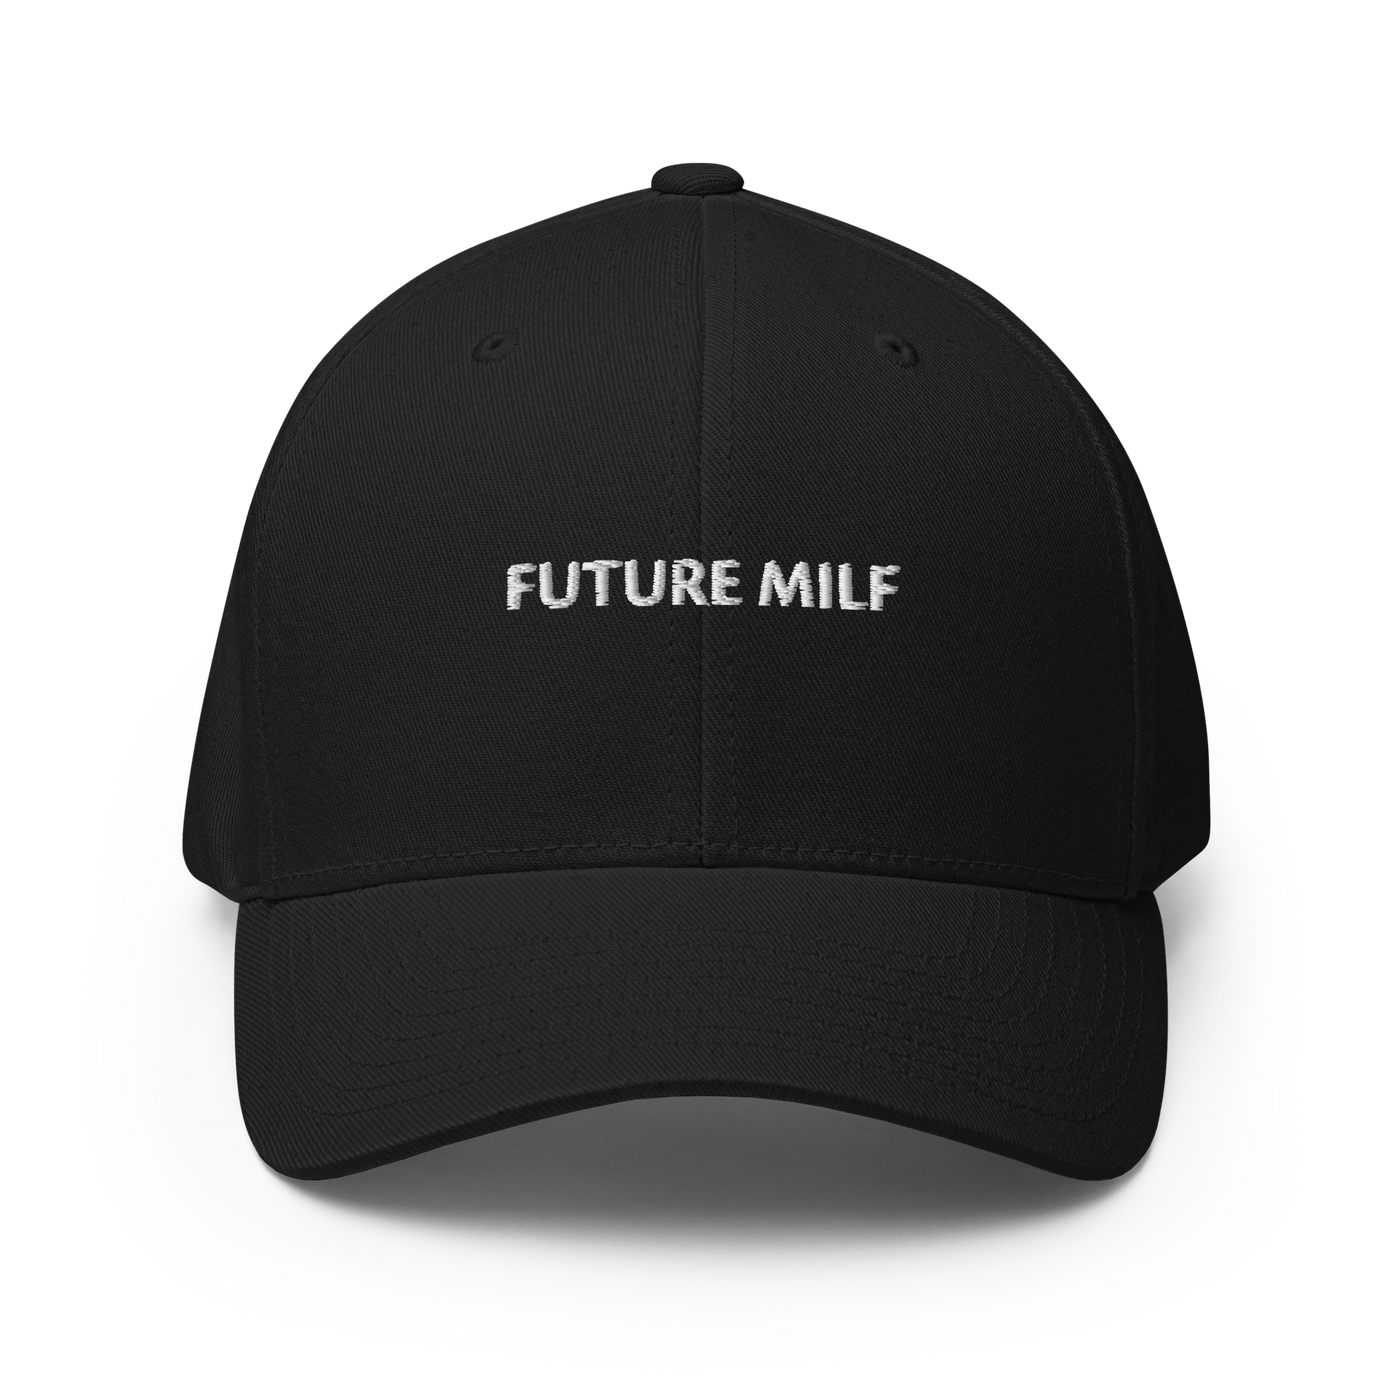 Future Milf Flexfit Cap - Black - S/M - Just Another Cap Store